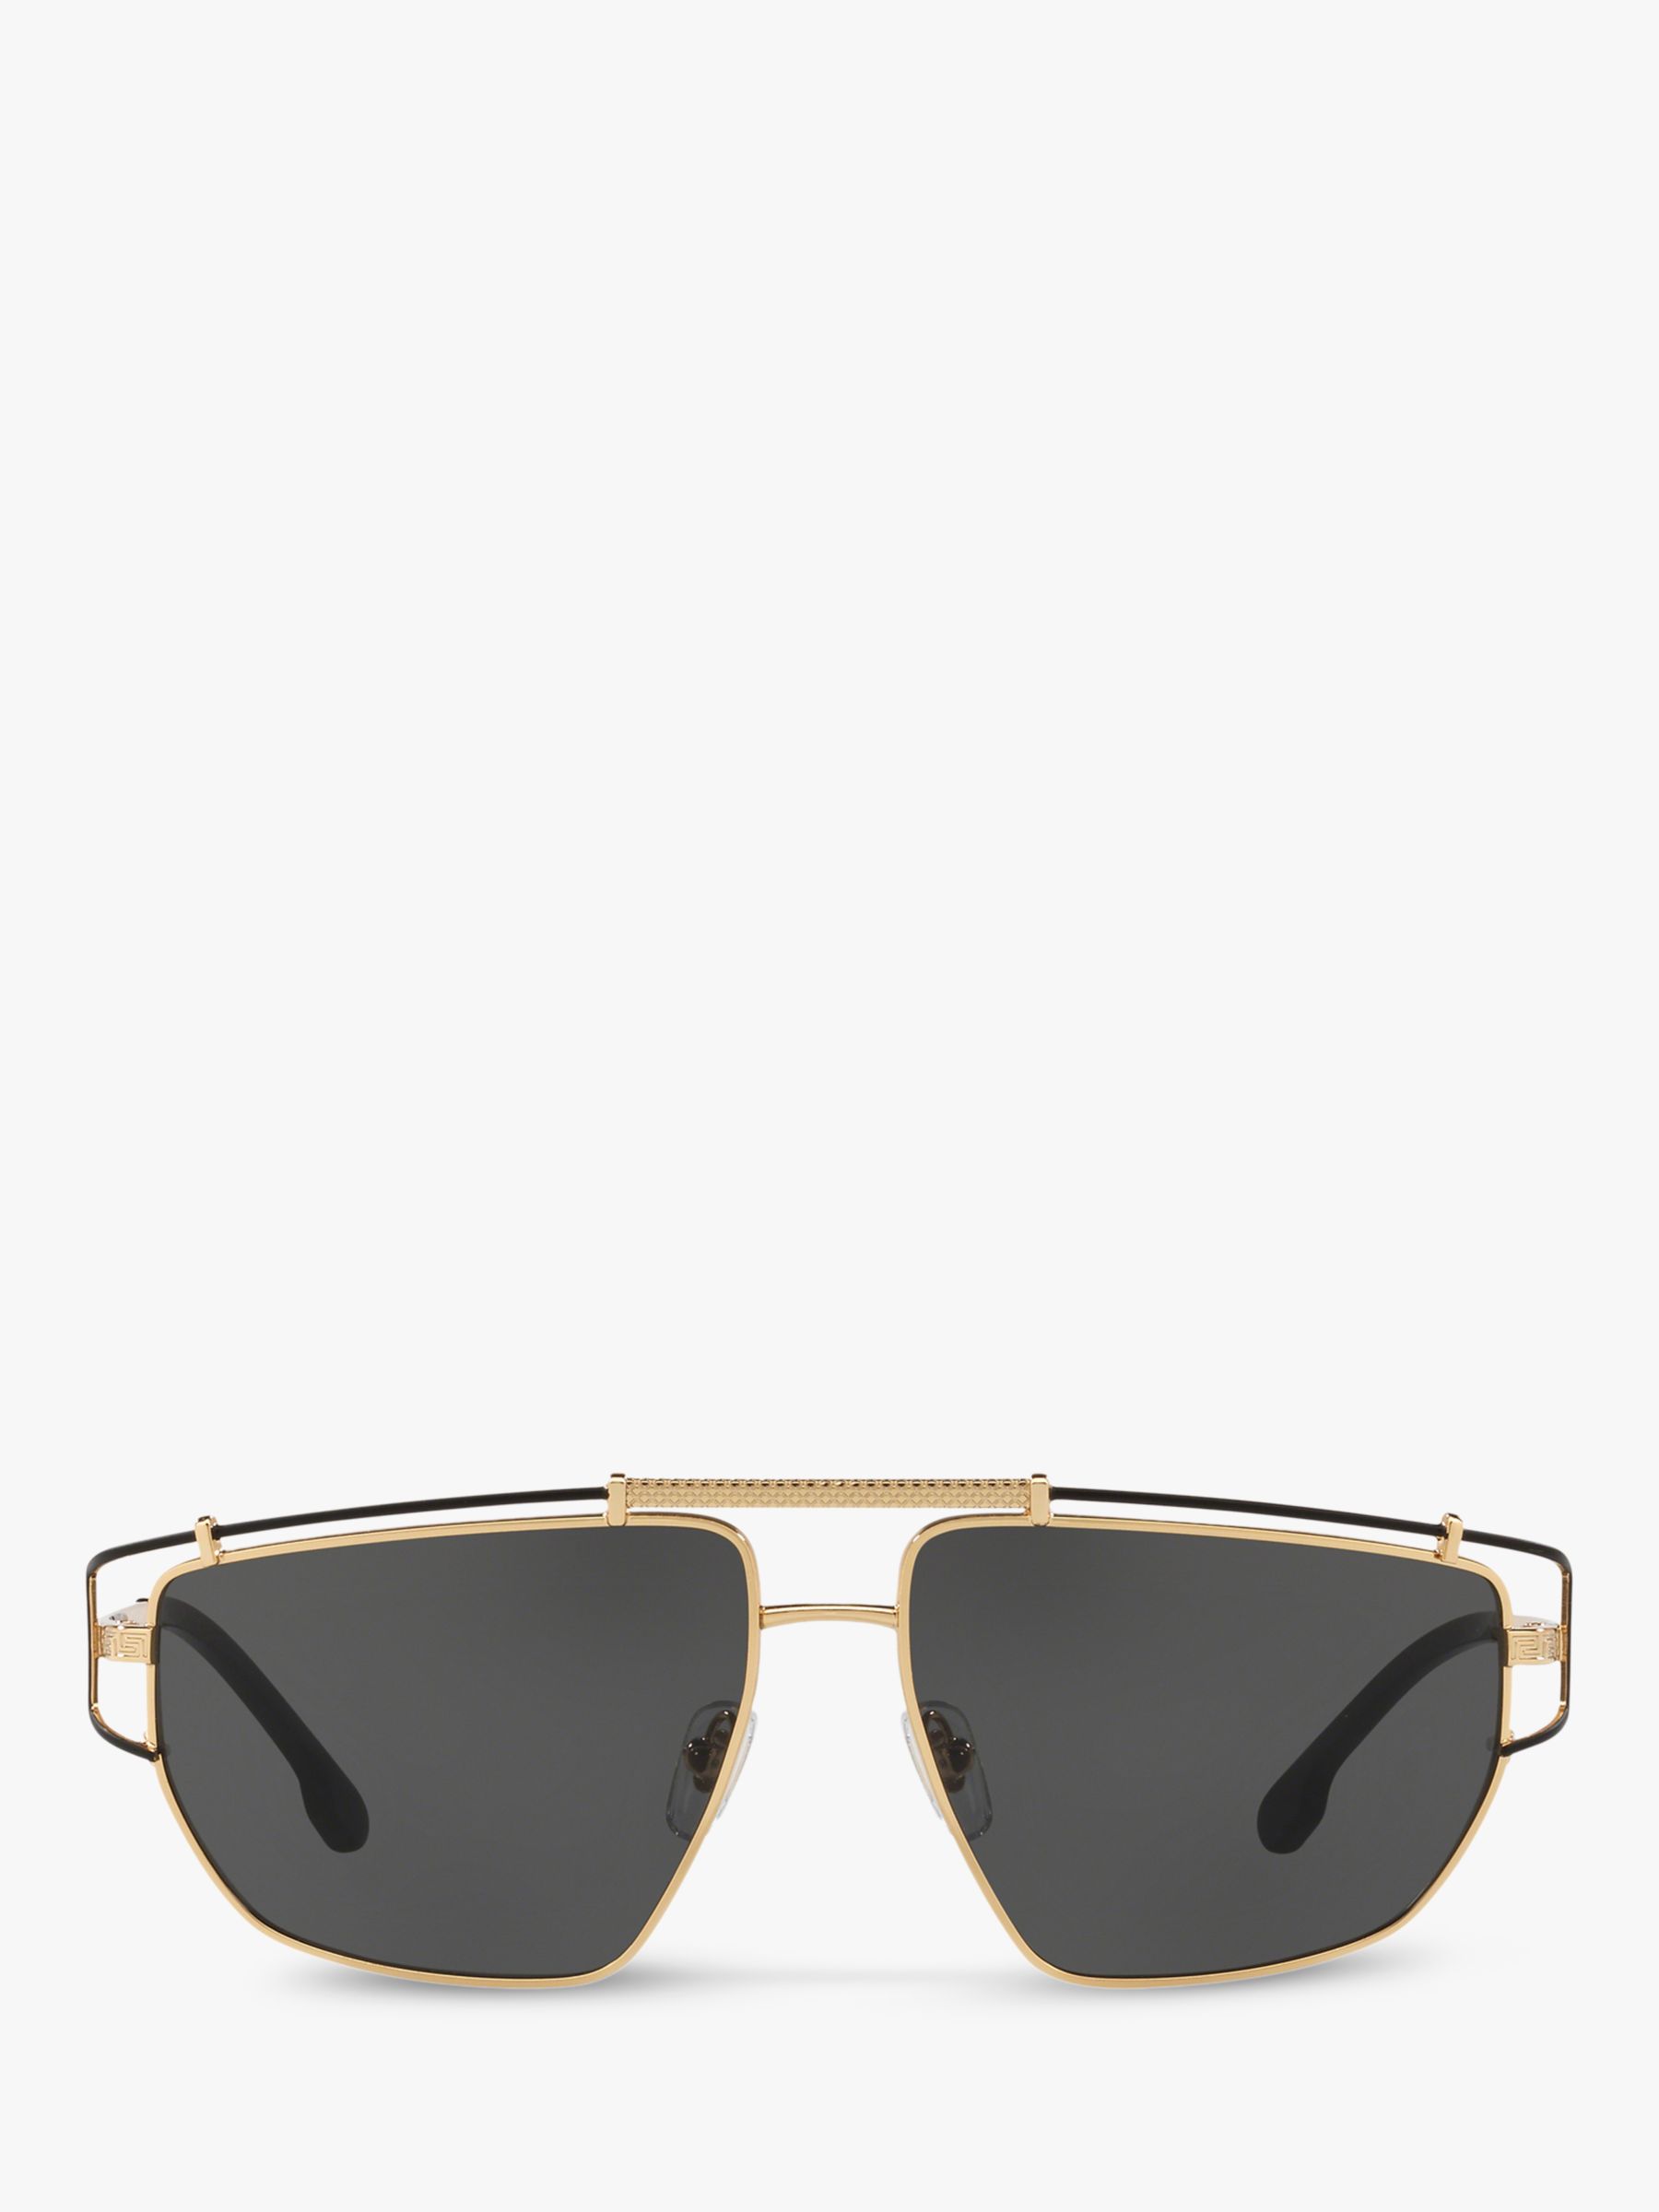 Versace VE2202 Men's Square Sunglasses, Gold/Black at John Lewis & Partners